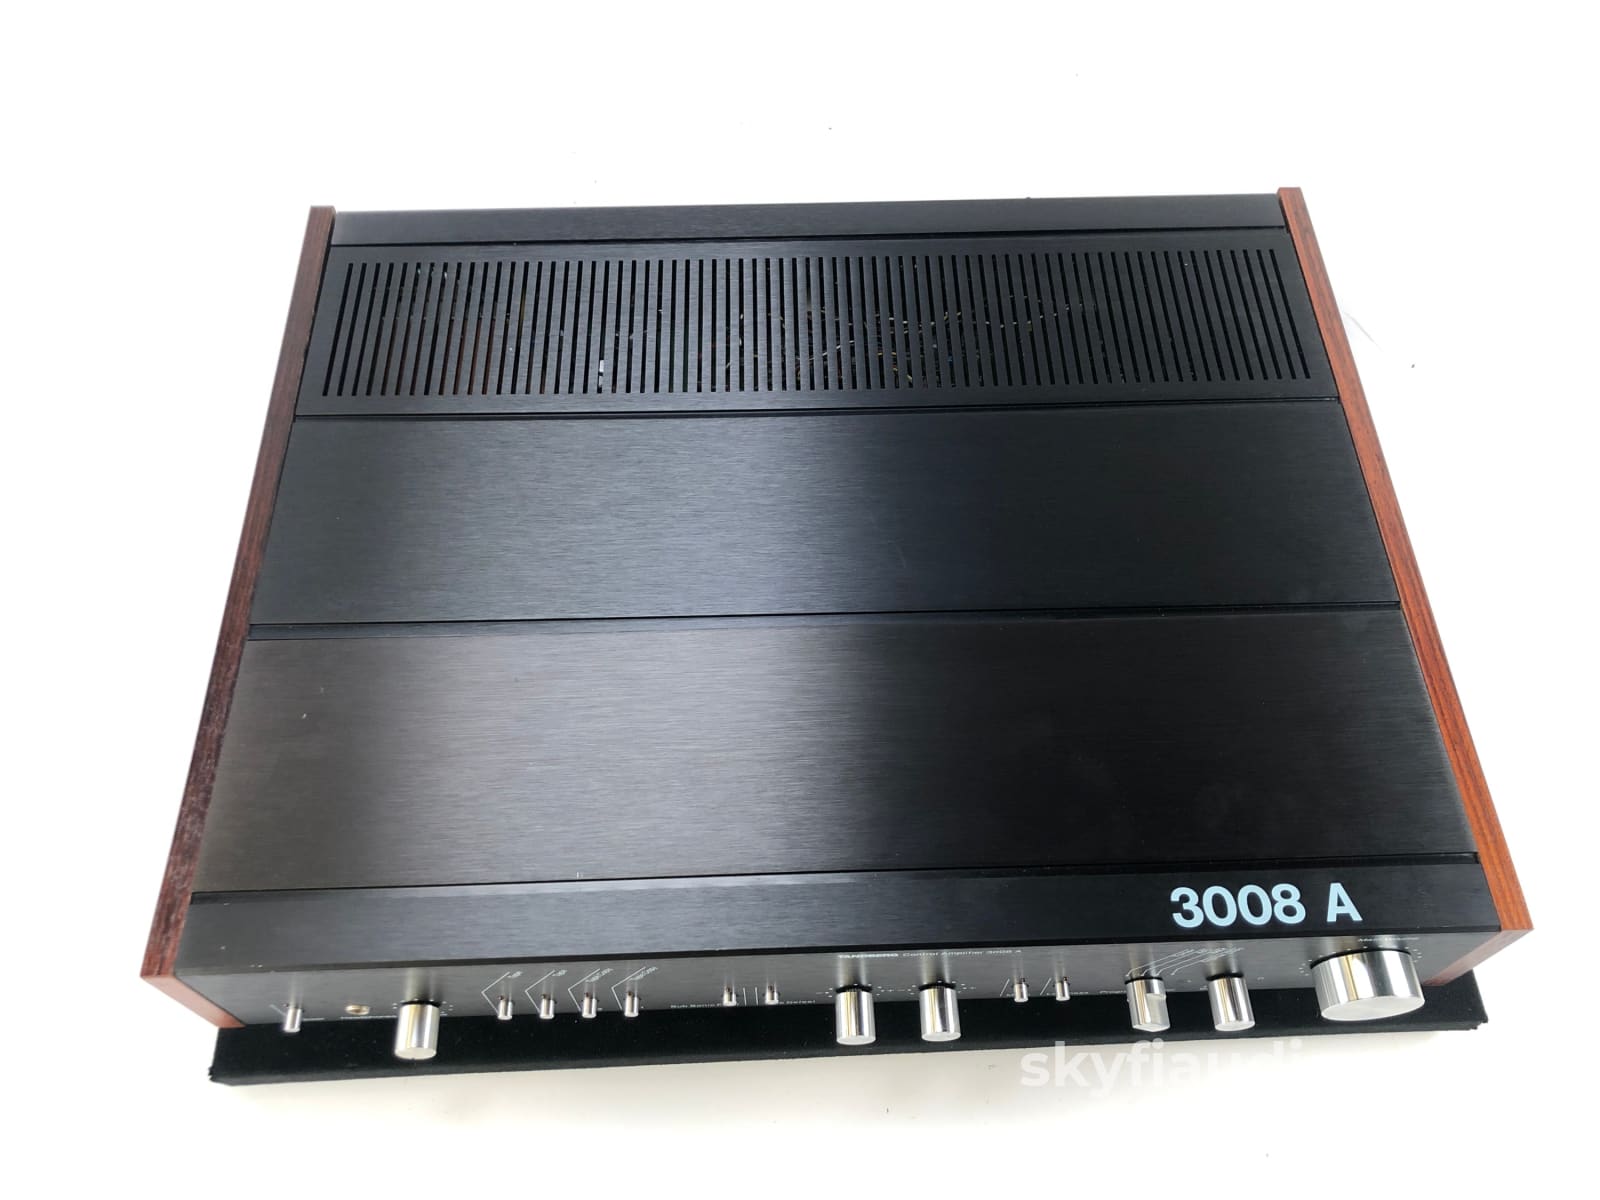 Tandberg 3008A Preamp With Phono Input - Zero Negative Feedback Design Preamplifier